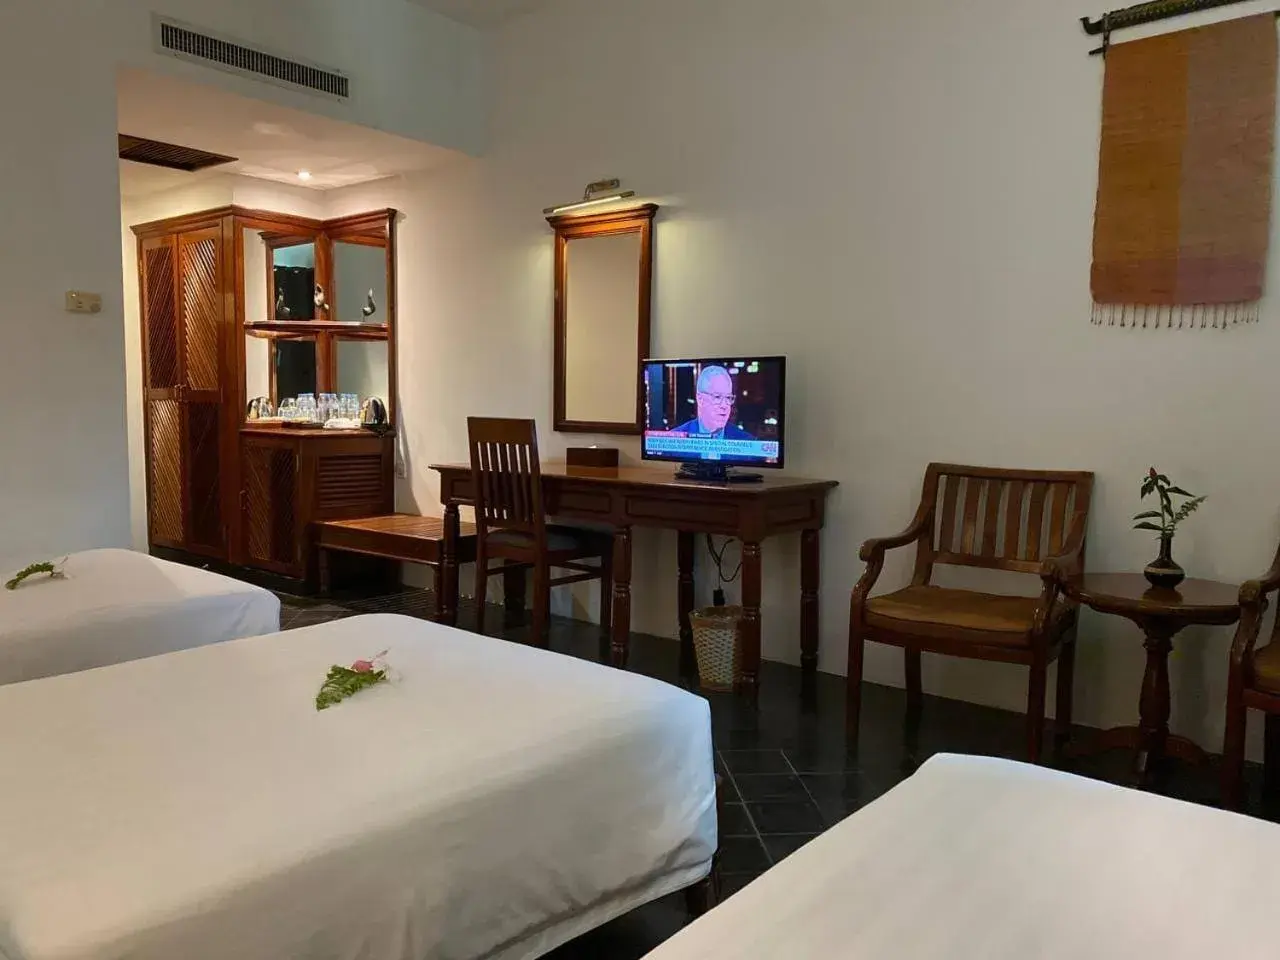 Bedroom, TV/Entertainment Center in Kingdom Angkor Hotel